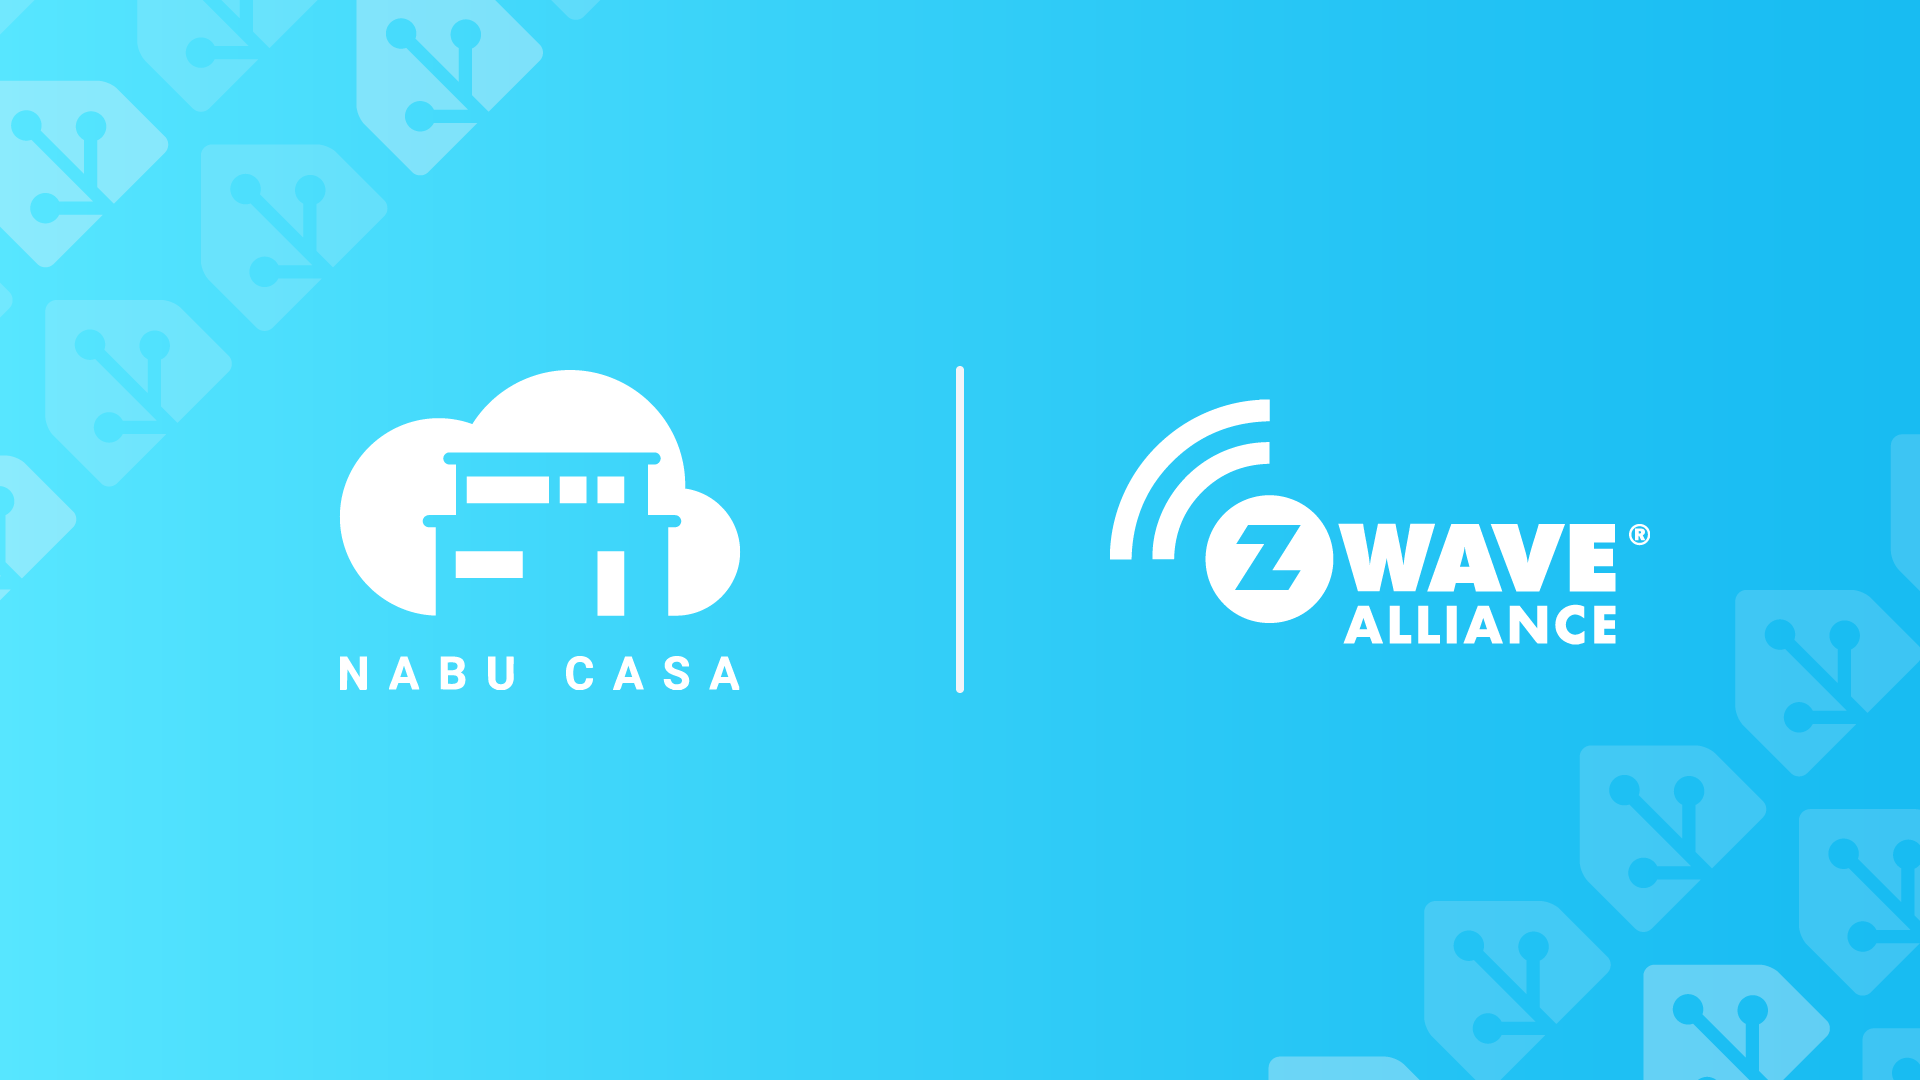 Home Assistant Nabu Casa se une a la Alianza Z-Wave